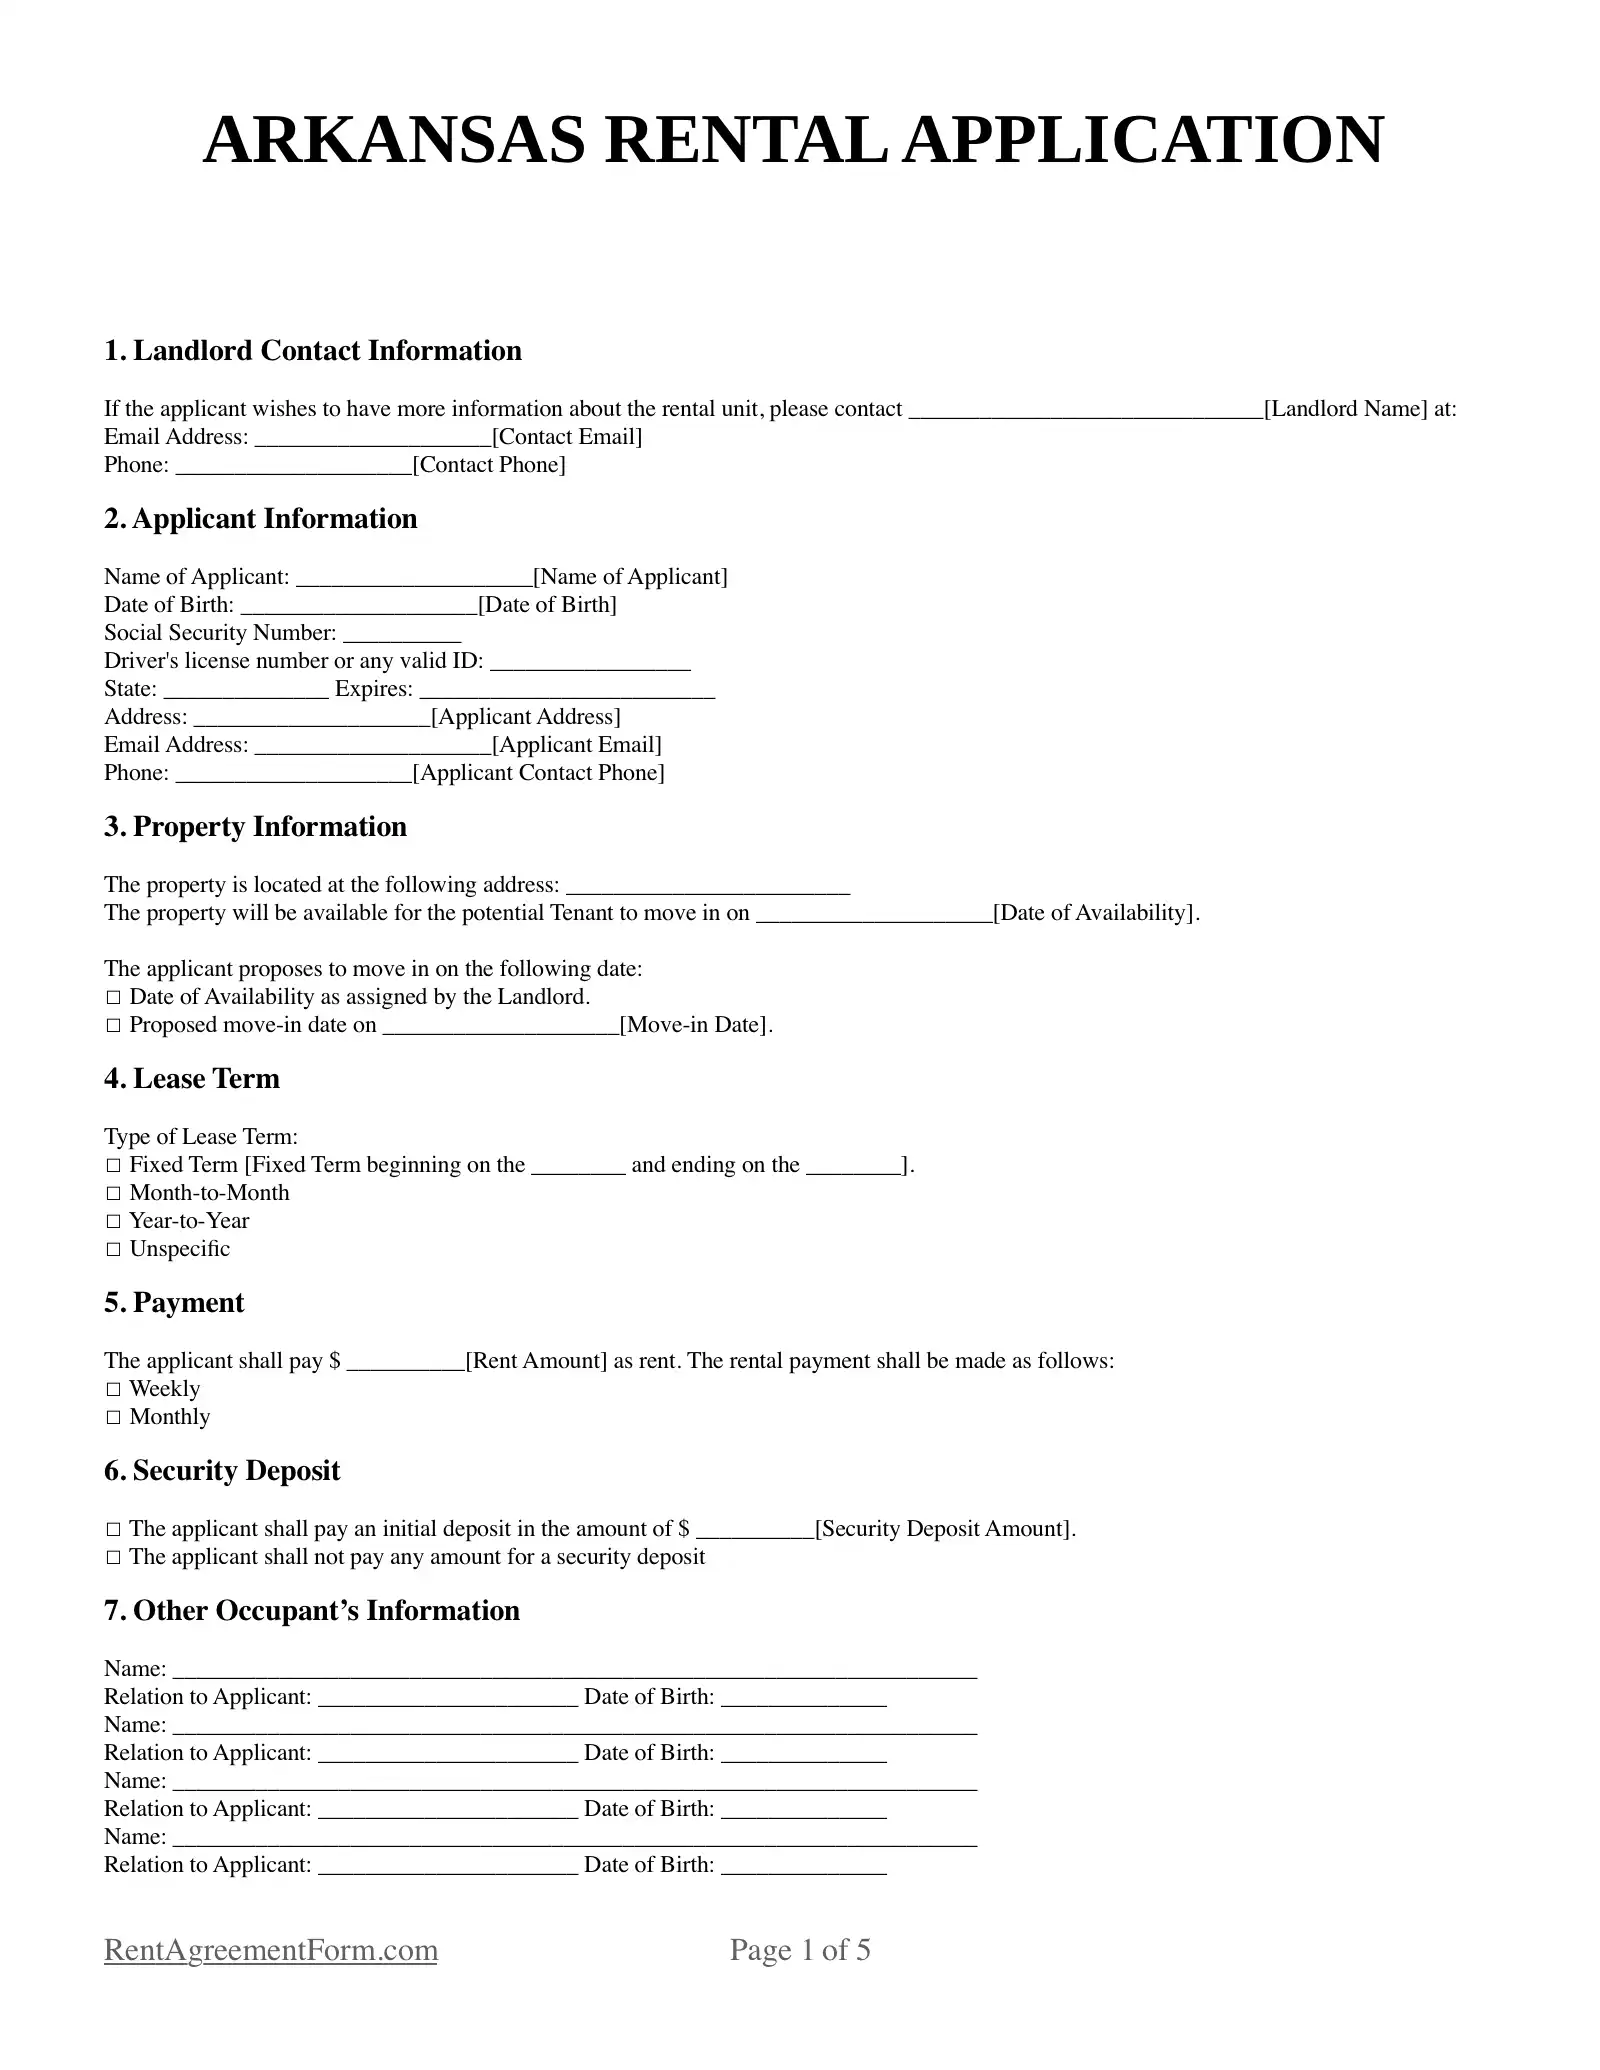 Arkansas Rental Application Sample